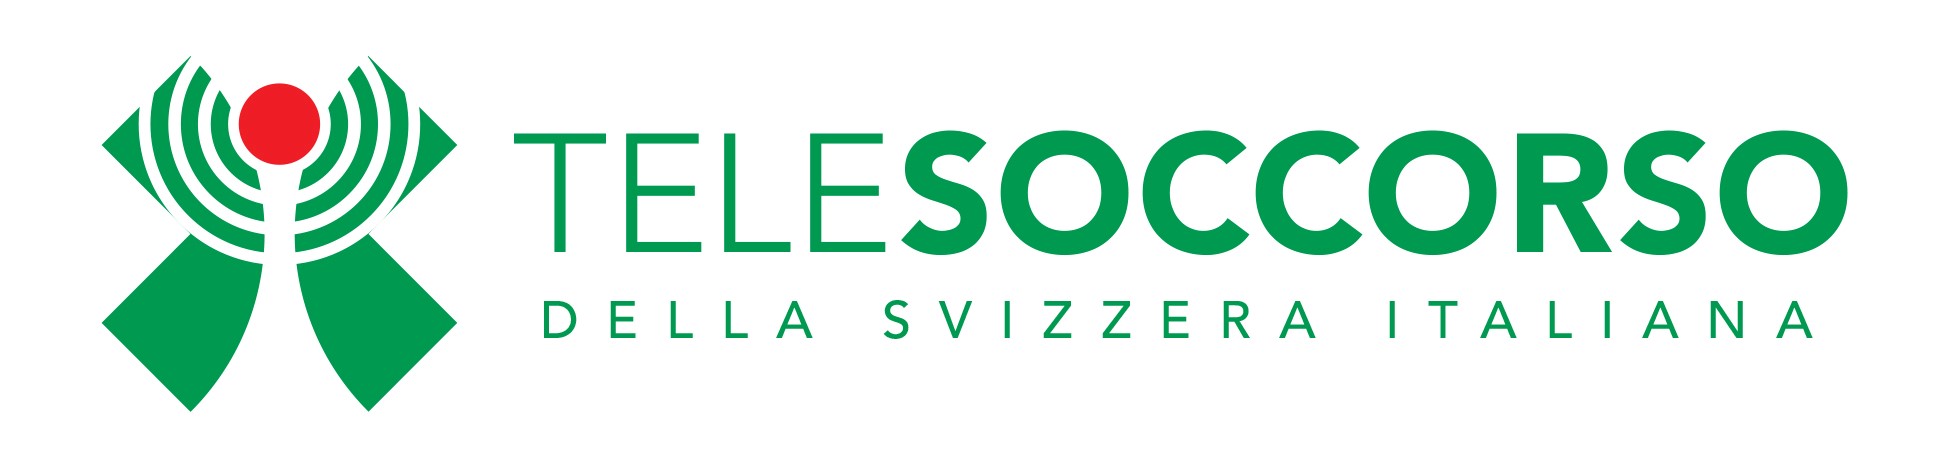 Logo telesoccorso